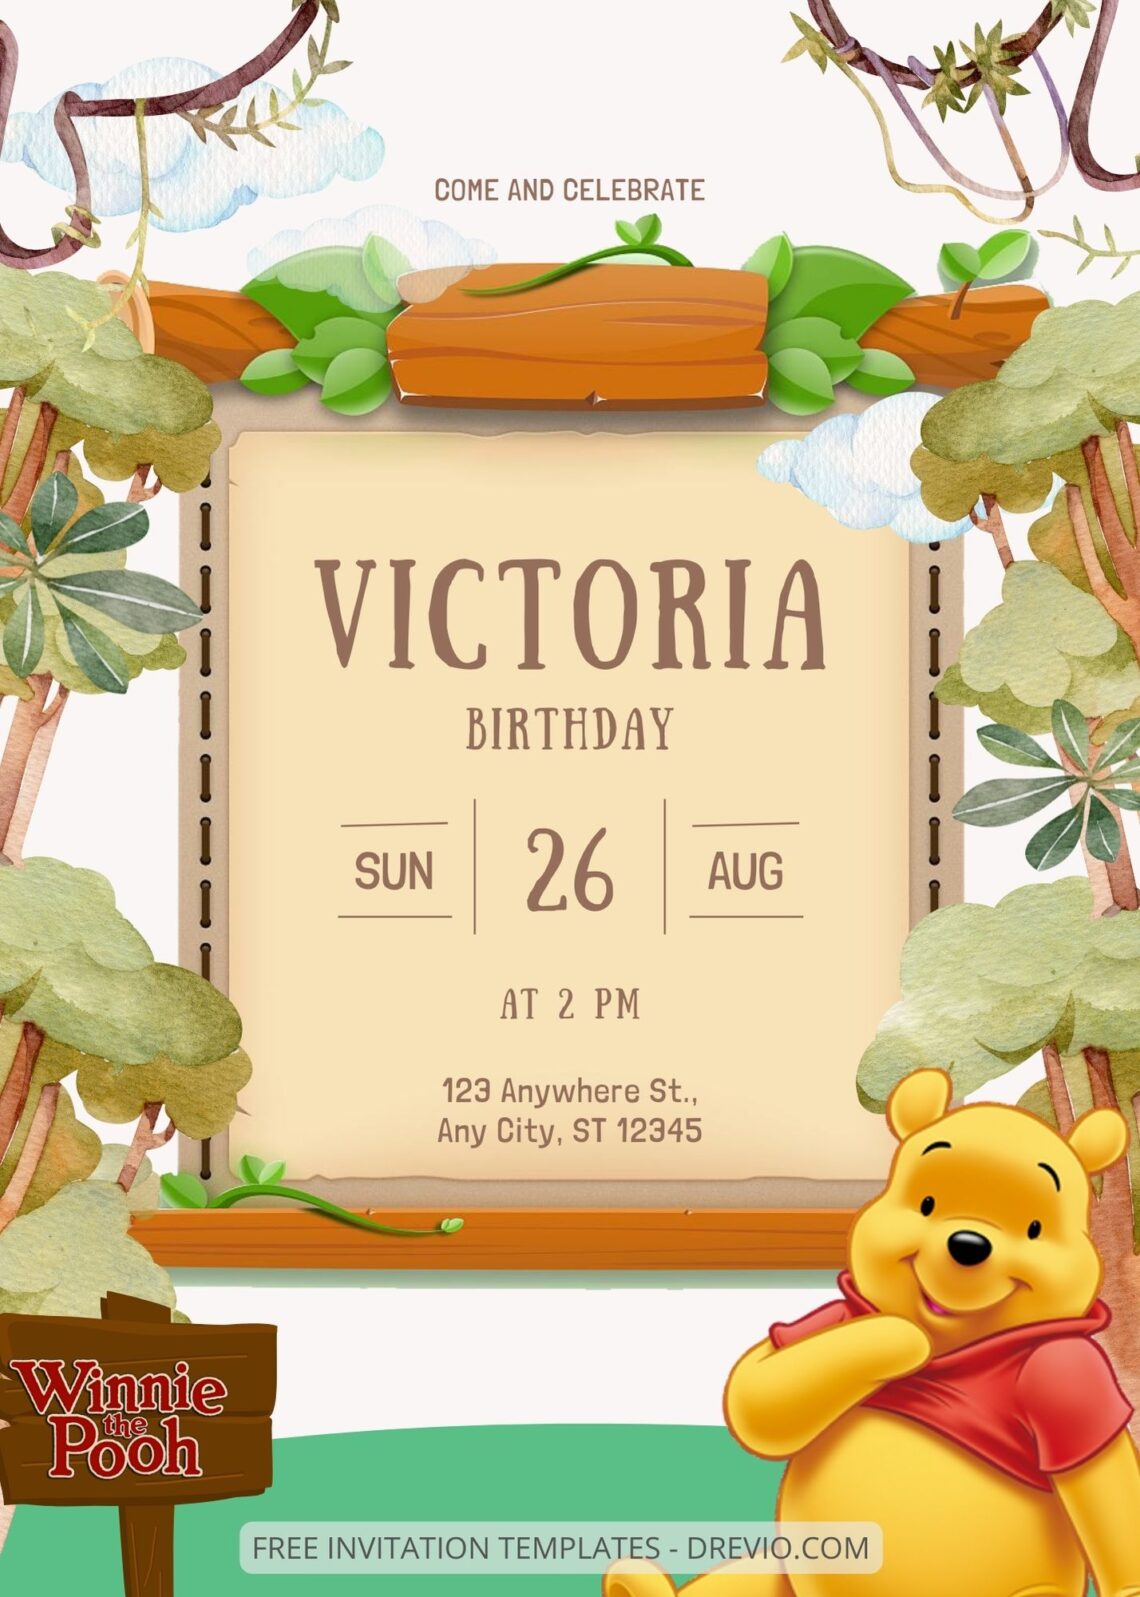 FREE EDITABLE - 9+ Winnie The Pooh Canva Birthday Invitation Templates One